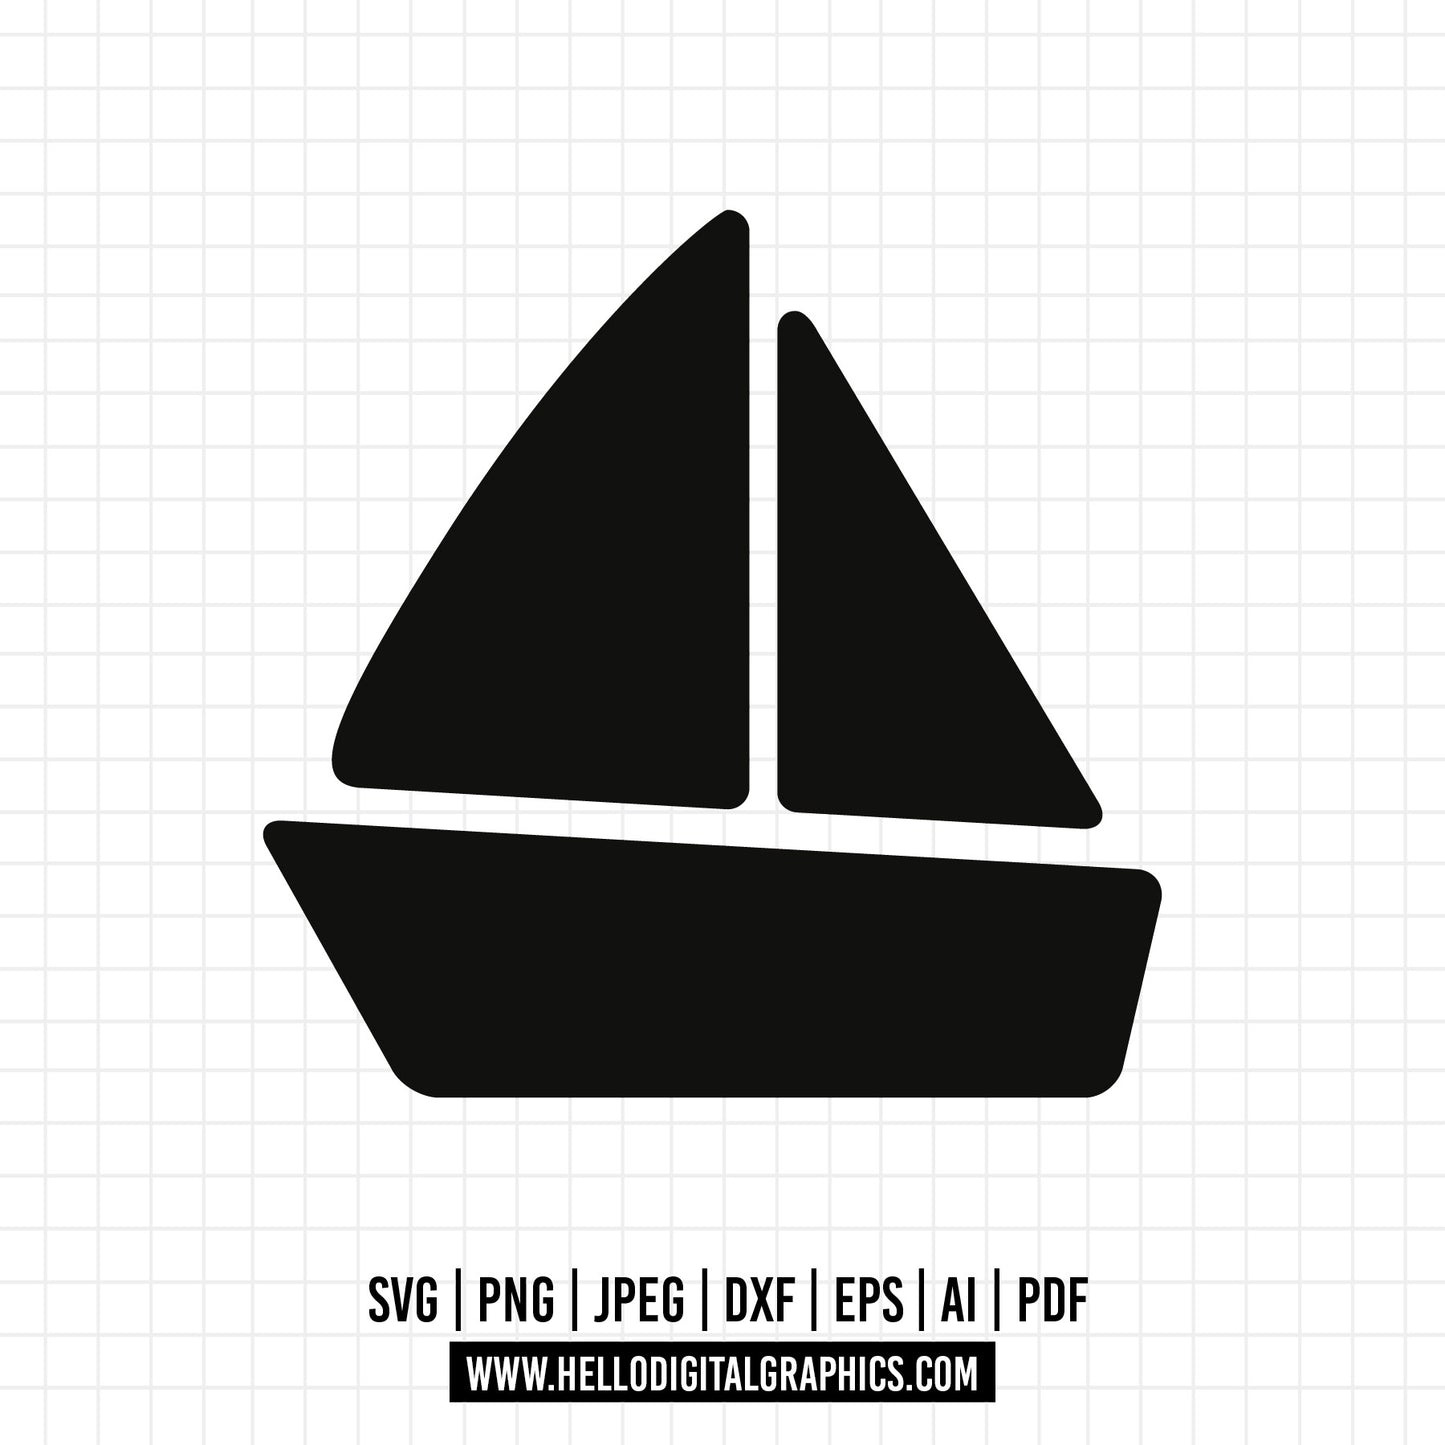 COD669- Sailboat SVG, Boat SVG, Sailboat Silhouette SVG, Black boat svg, Pirate Ship svg, Pirate Ship Captain svg, Cut File Cricut, Silhouette,Vehicles svg